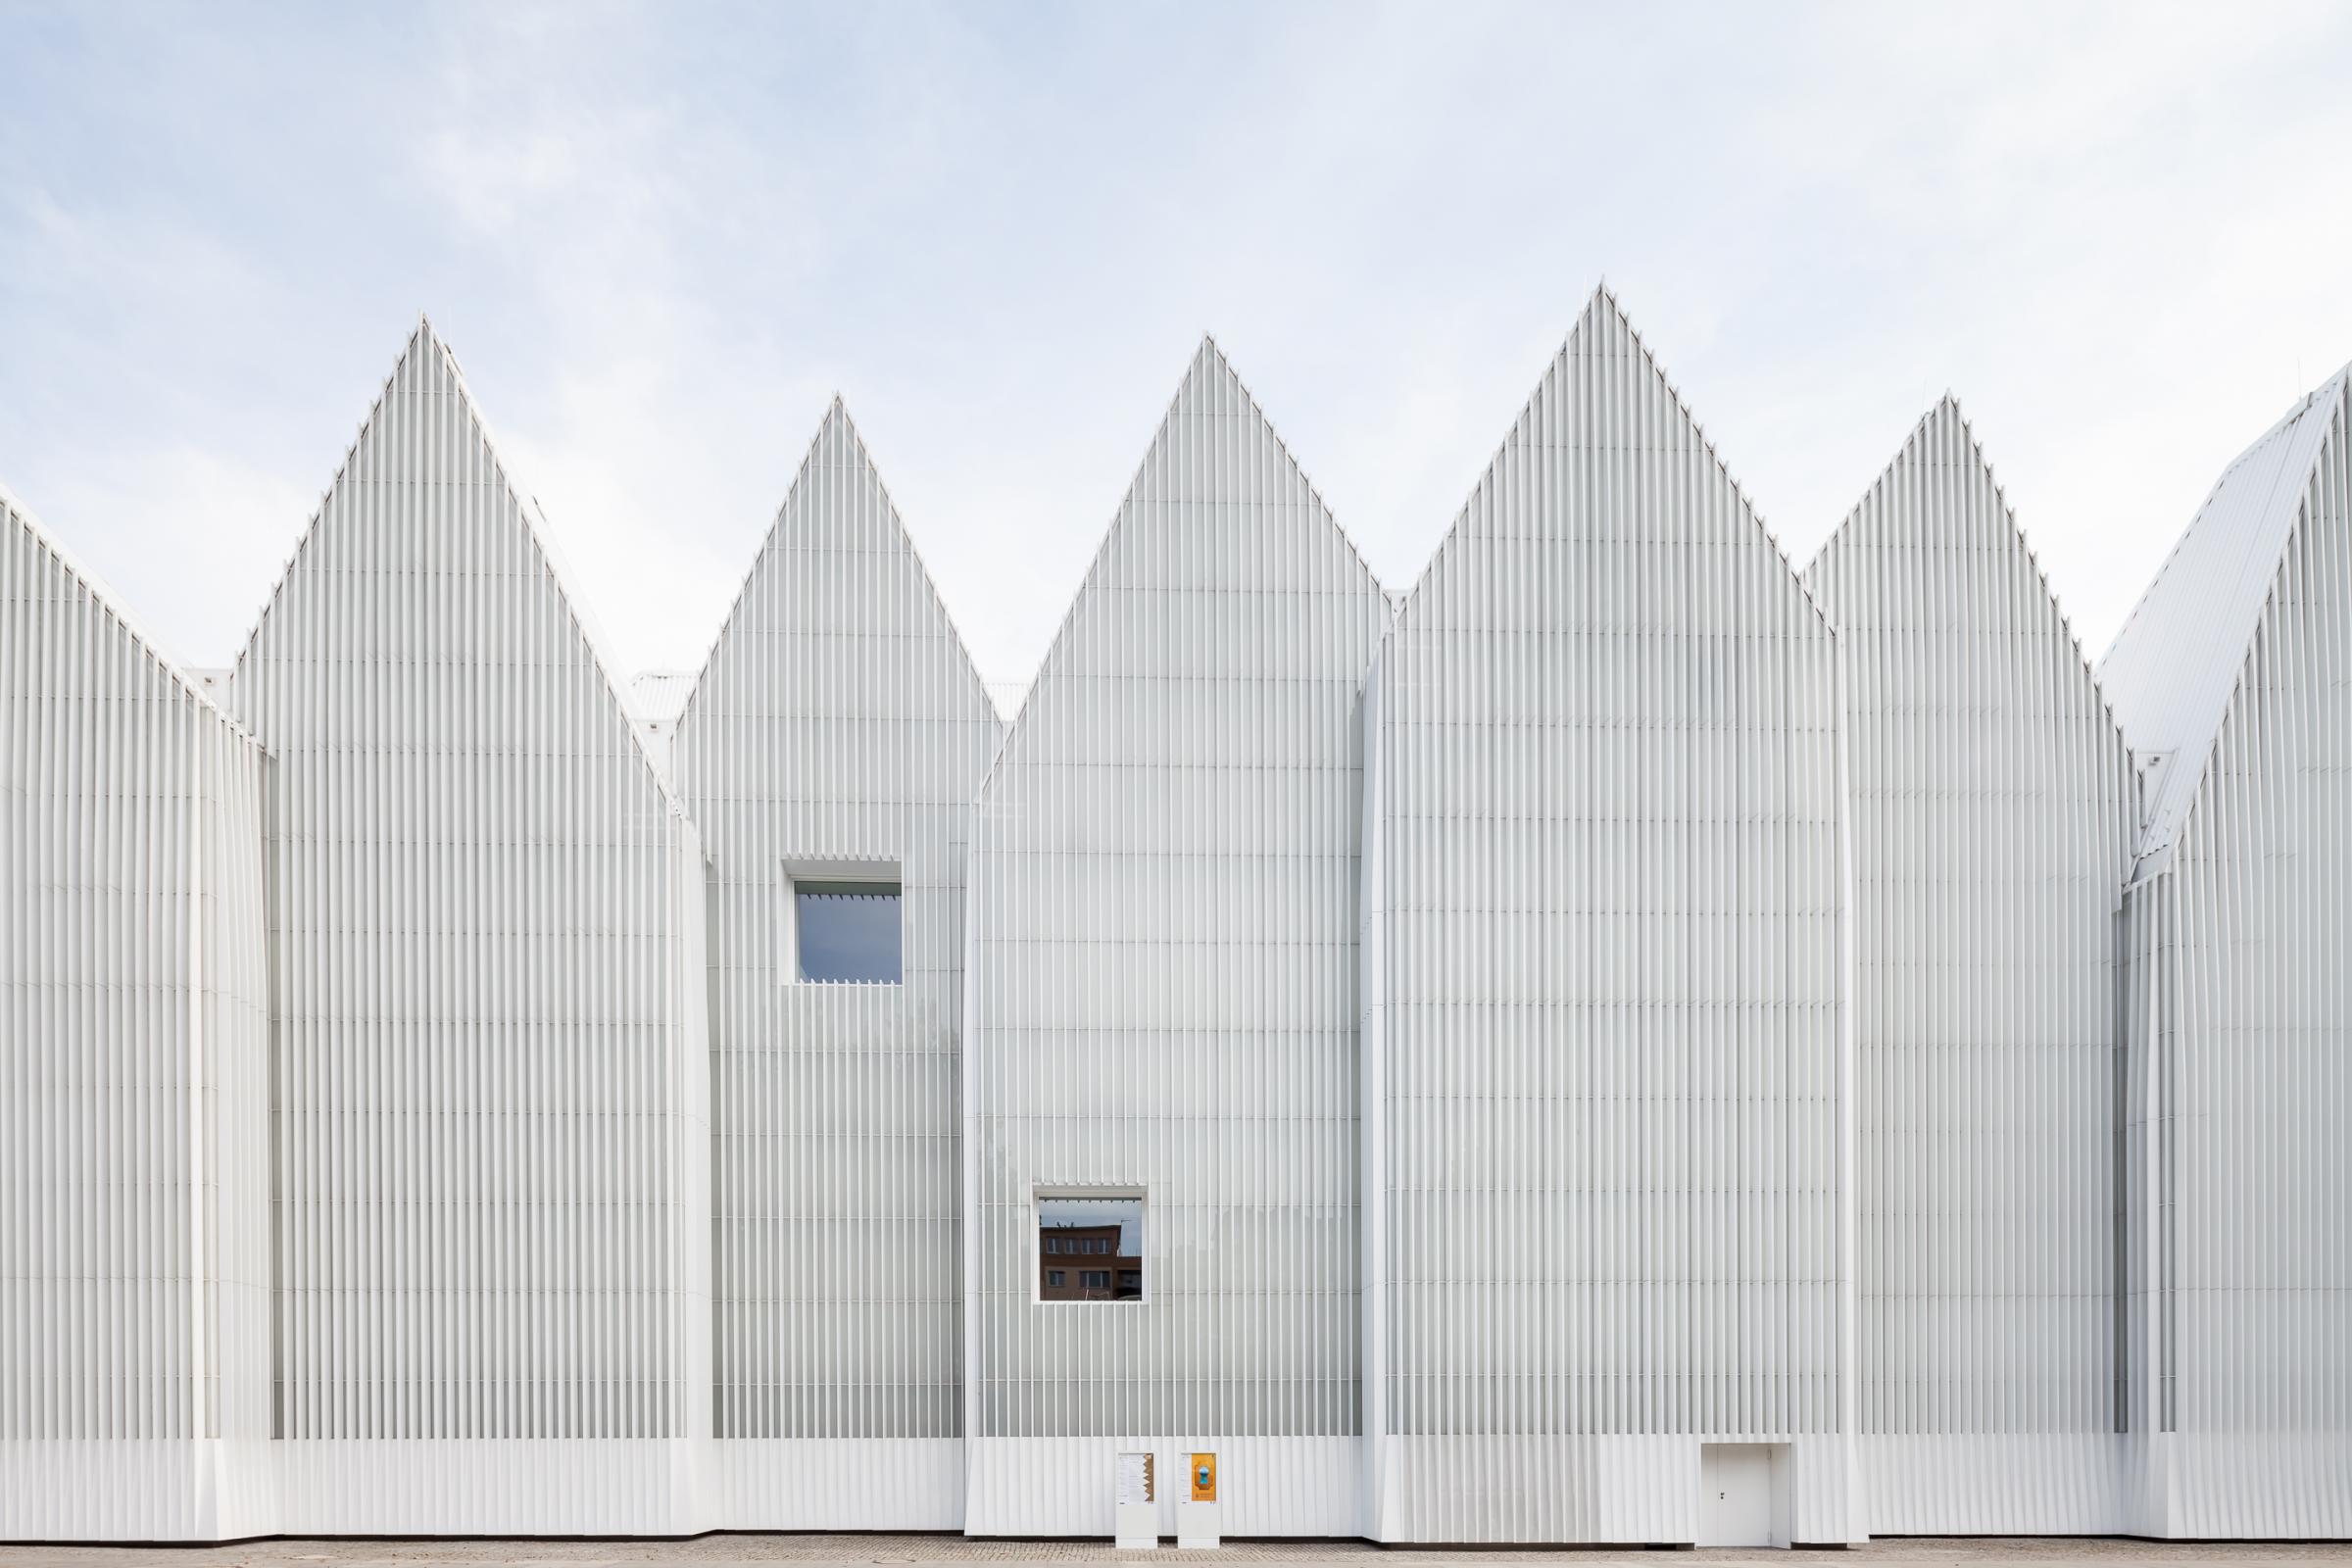 Photograph of Szczecin Philharmonic Hall, designed by Estudio Barozzi Veiga and located in Szczecin, Poland